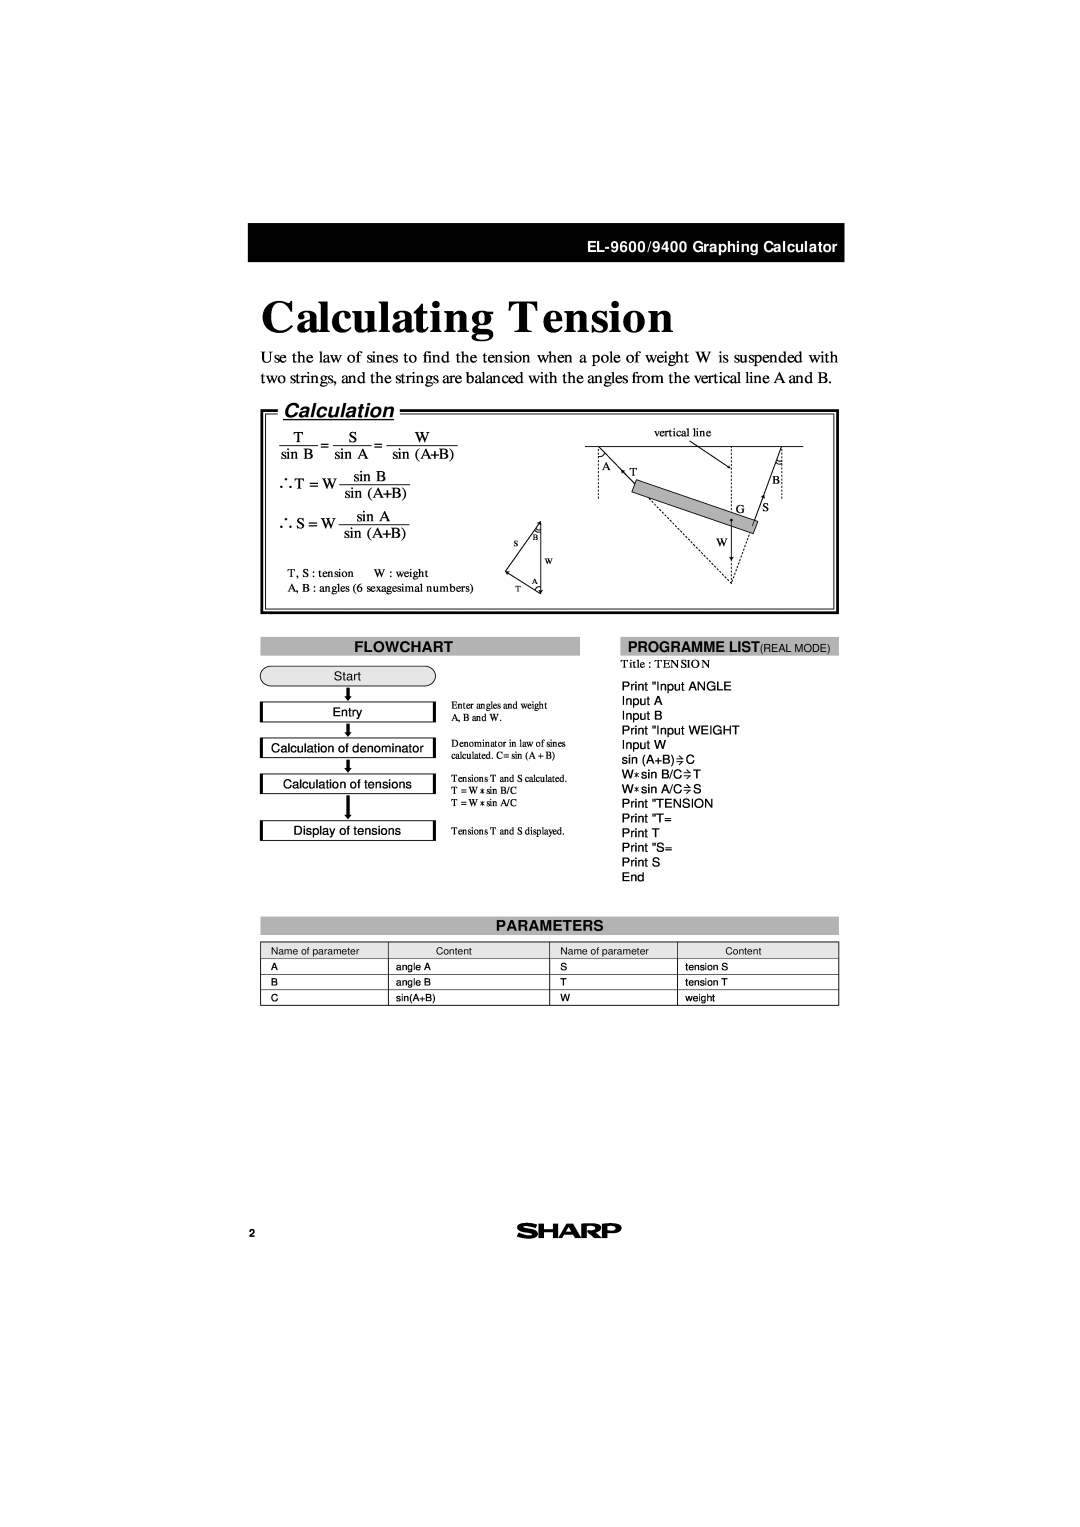 Sharp manual sin B, T = W, S = W, sin A, Calculating Tension, Calculation, EL-9600/9400 Graphing Calculator, Flowchart 